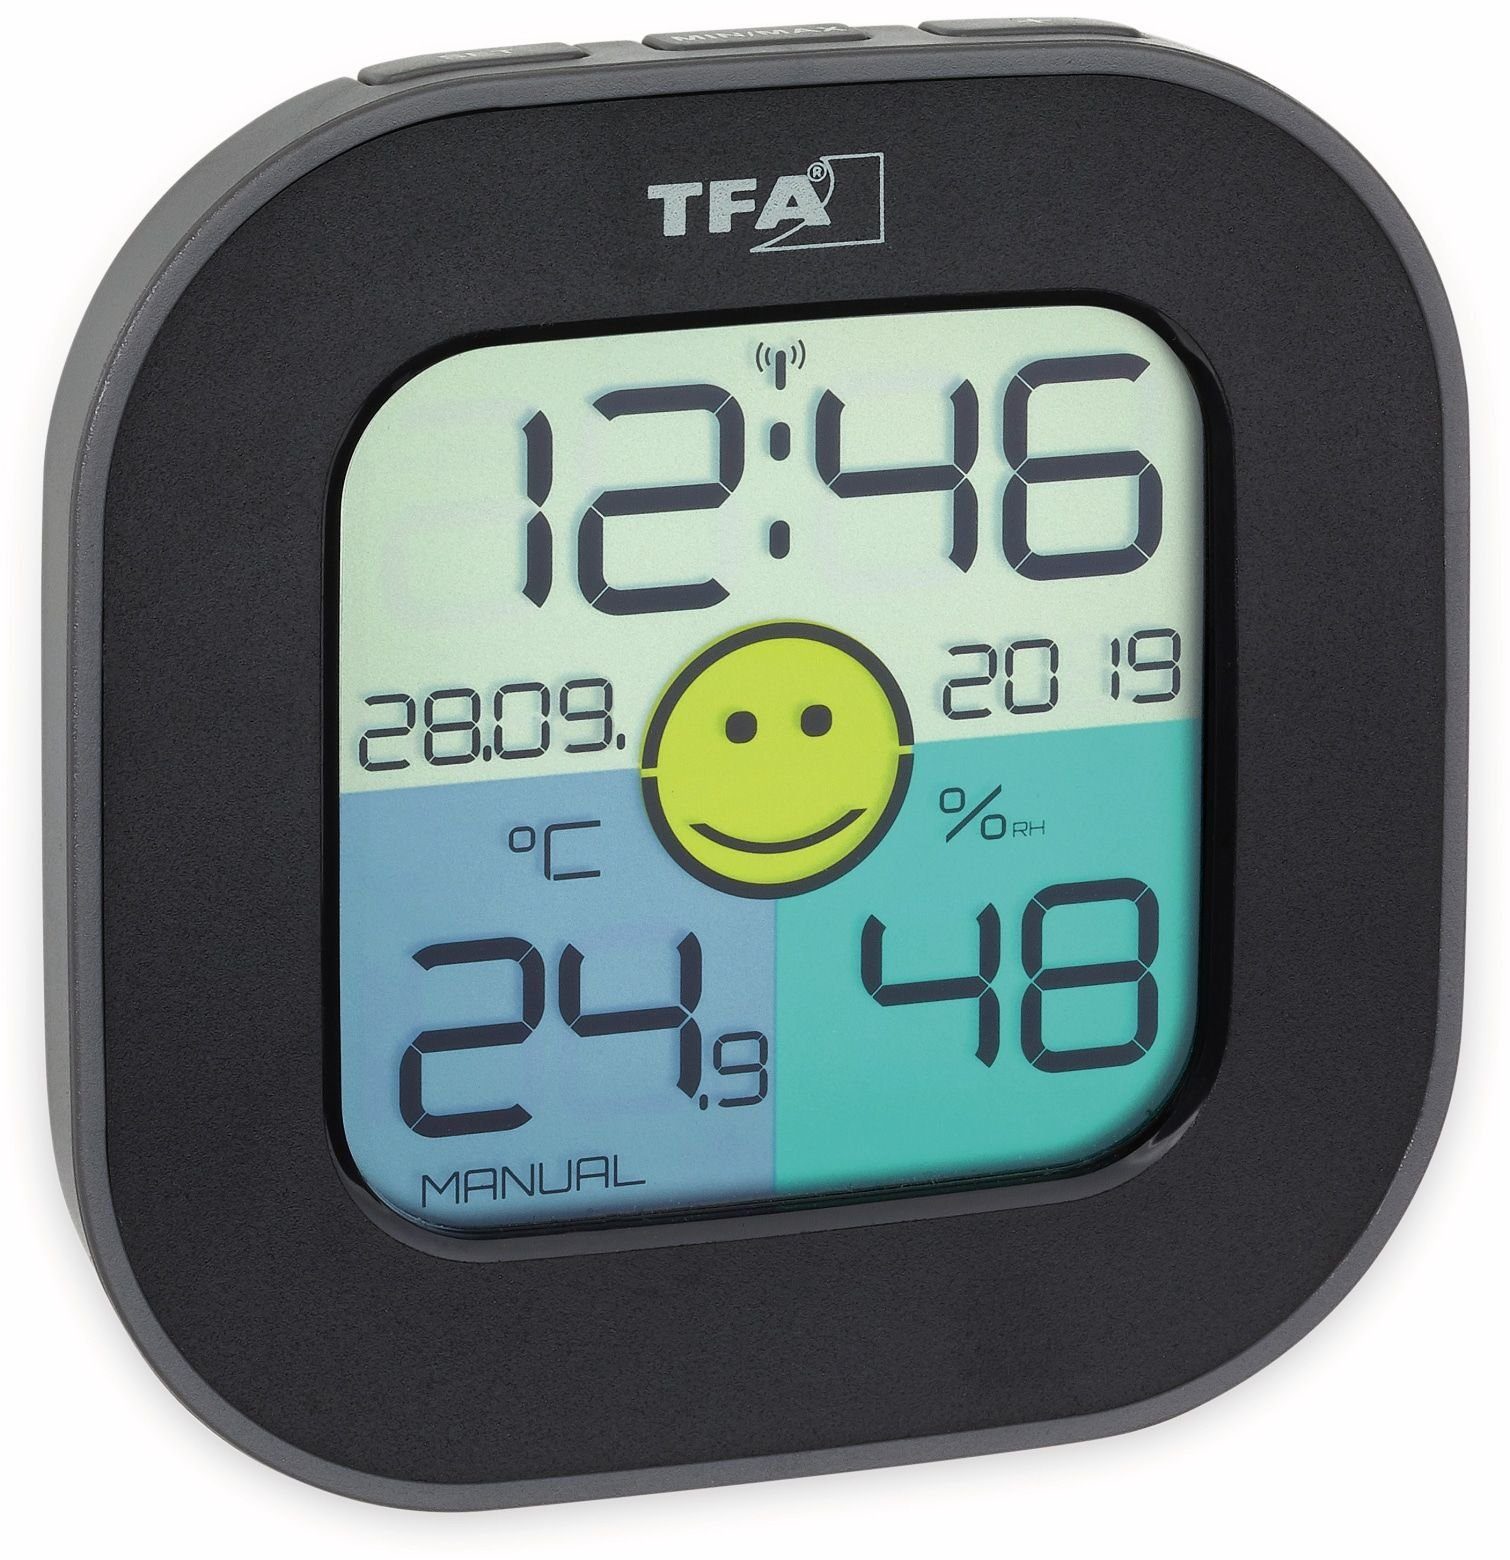 TFA Dostmann Tfa Fun, 30.5050.01 schwarz Badethermometer Thermo-Hygrometer TFA Digitales